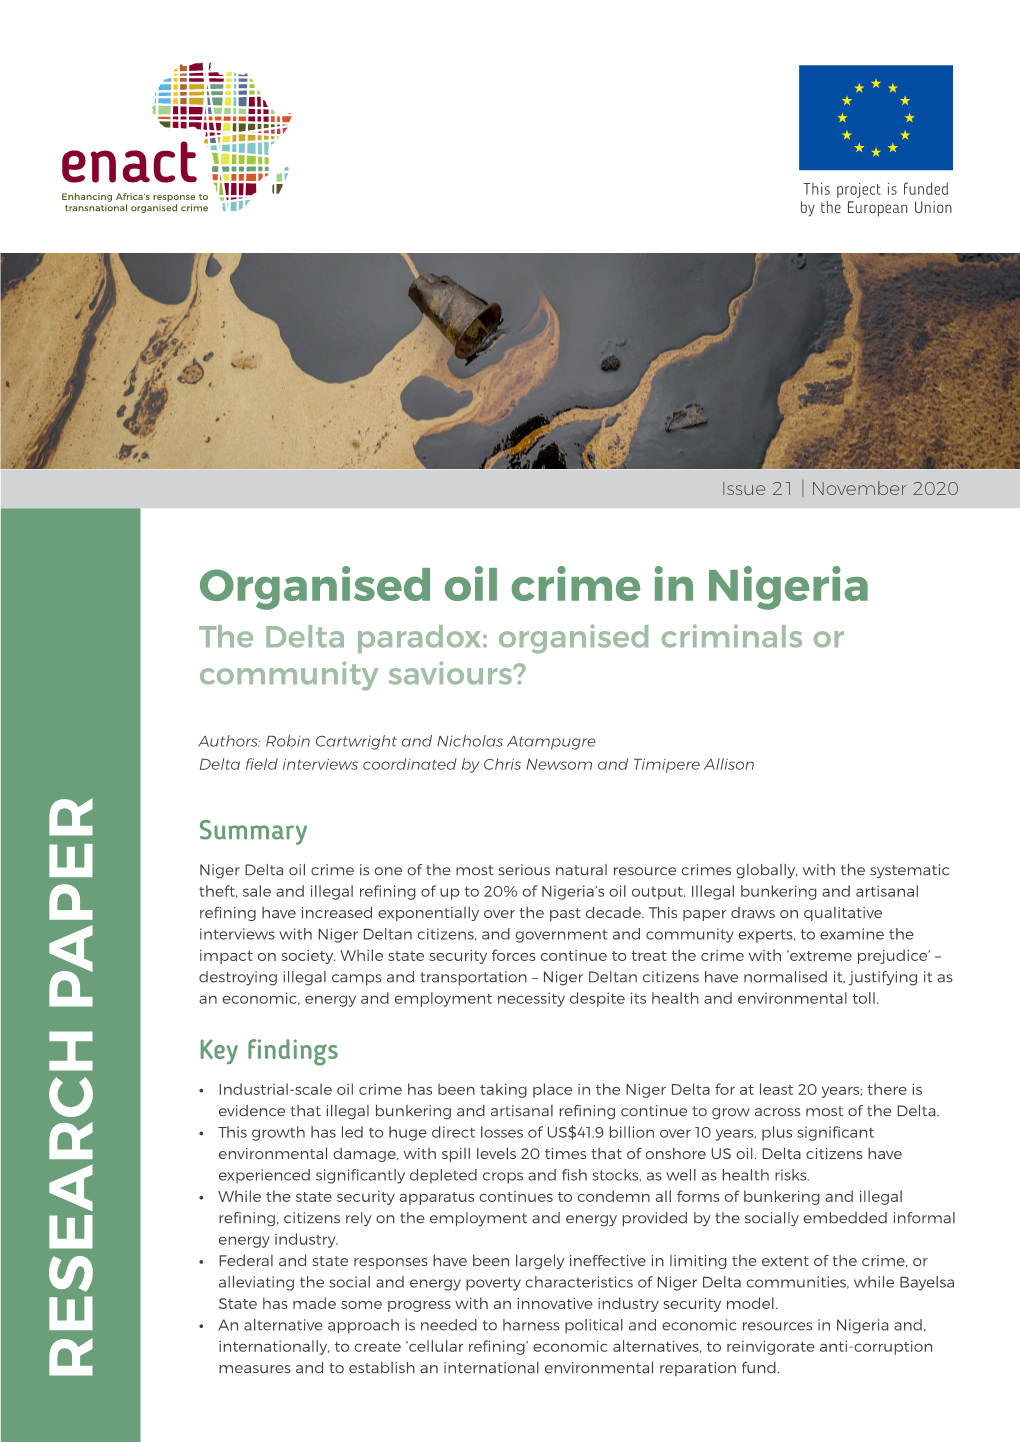 Organised Oil Crime in Nigeria the Delta Paradox: Organised Criminals Or Community Saviours?